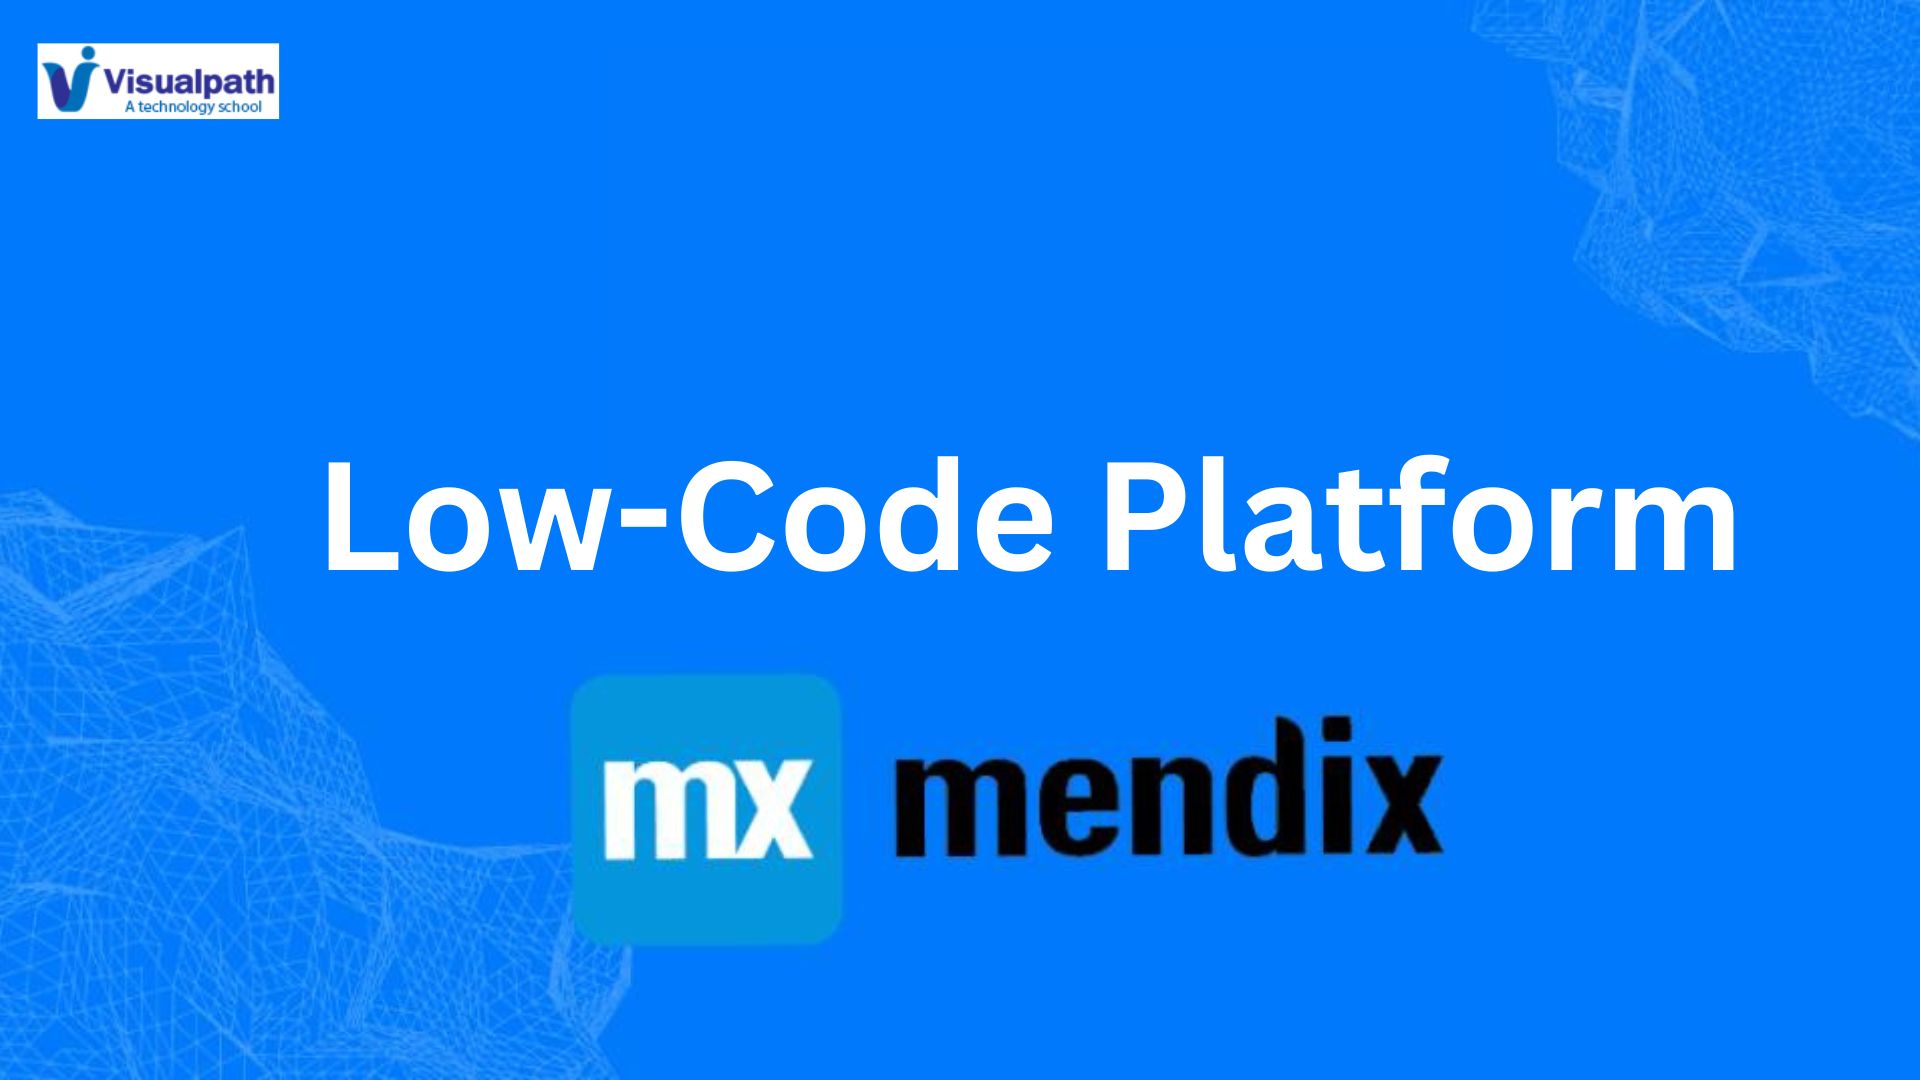 Mendix as an Effective Low-Code Platform